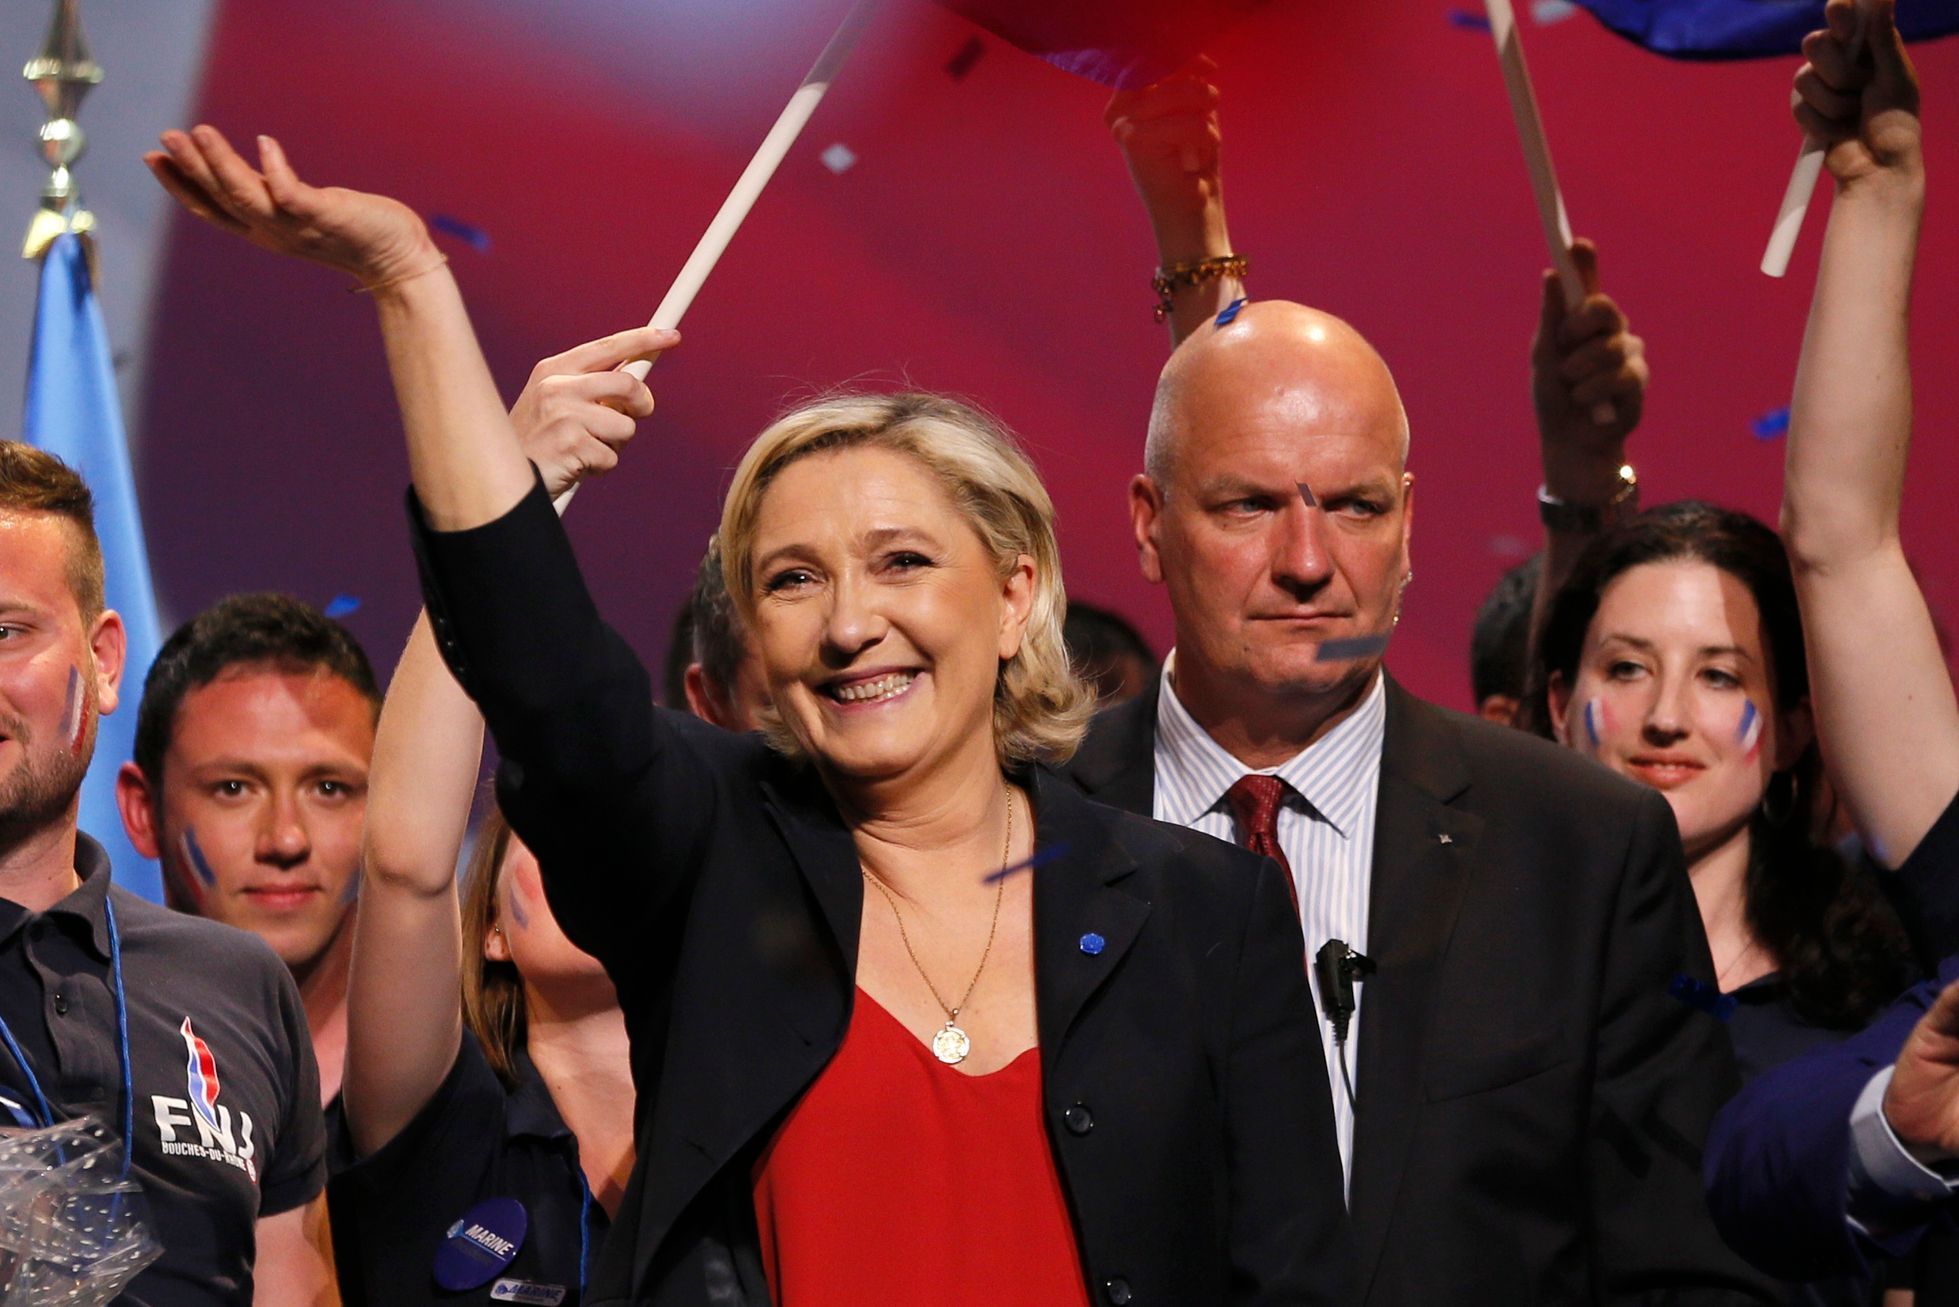 Marine Le Penová jásá